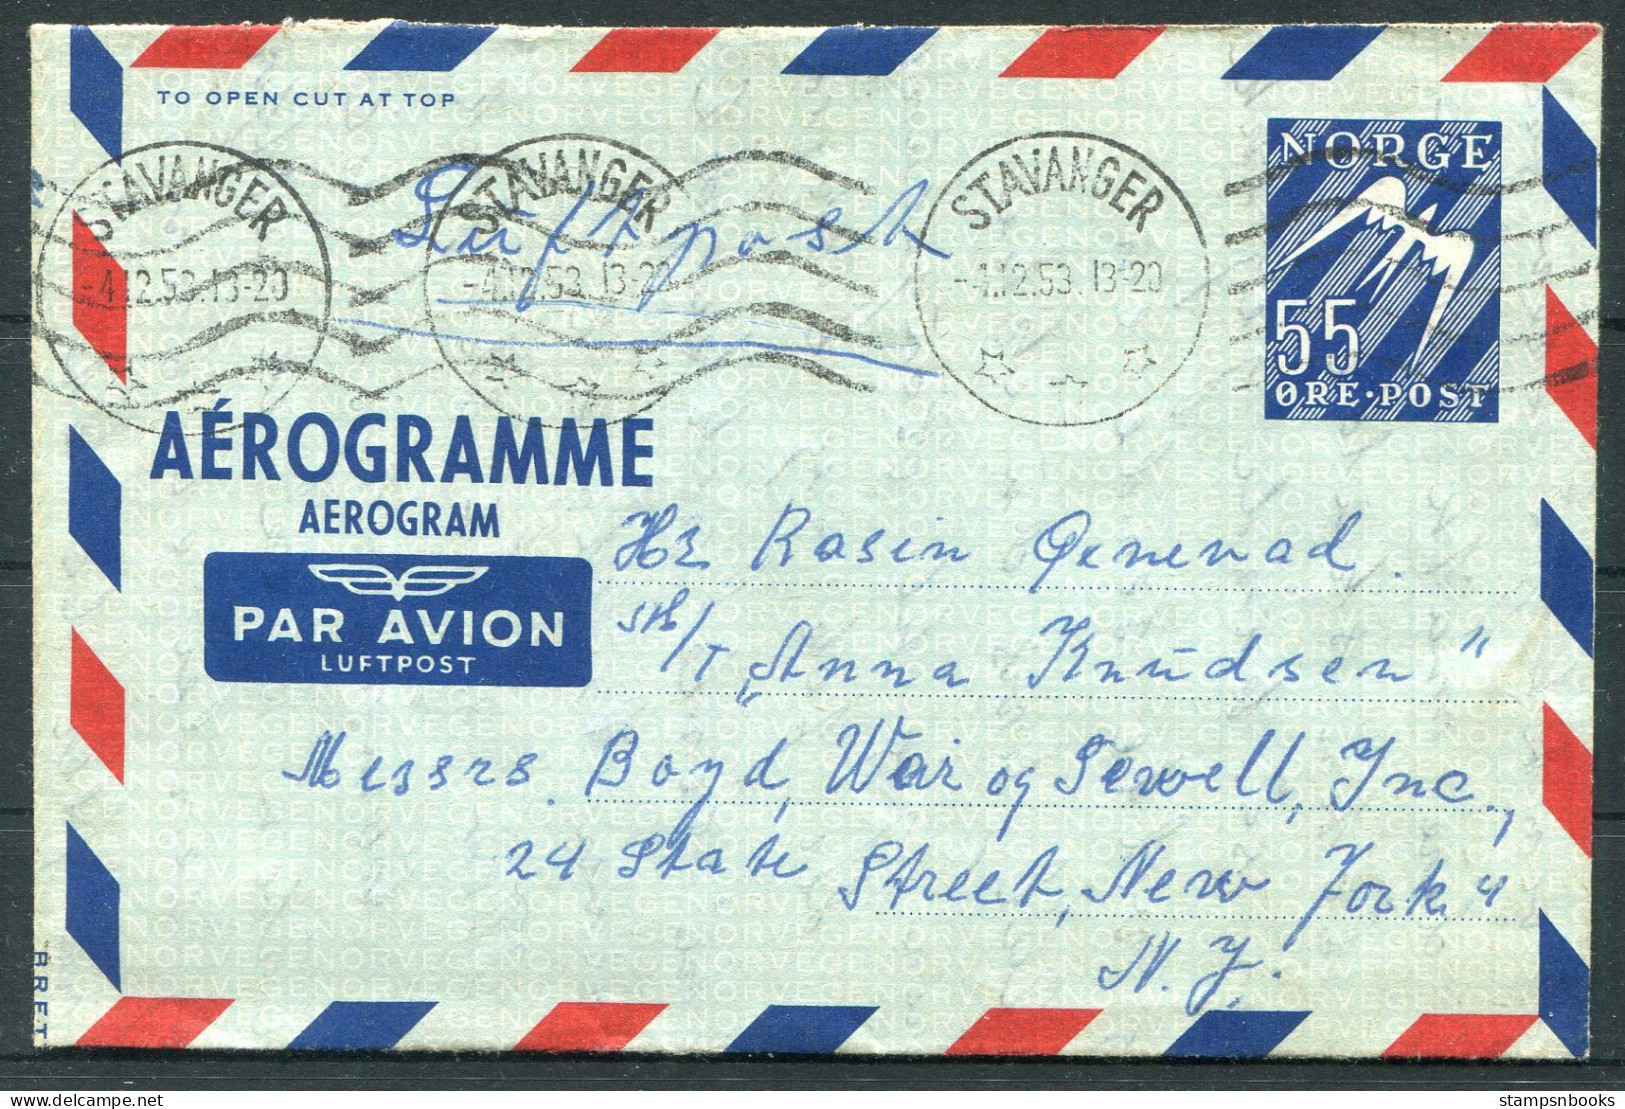 1953 Norway 55ore Aerogramme Aerogram Stavanger - New York, USA - Postal Stationery